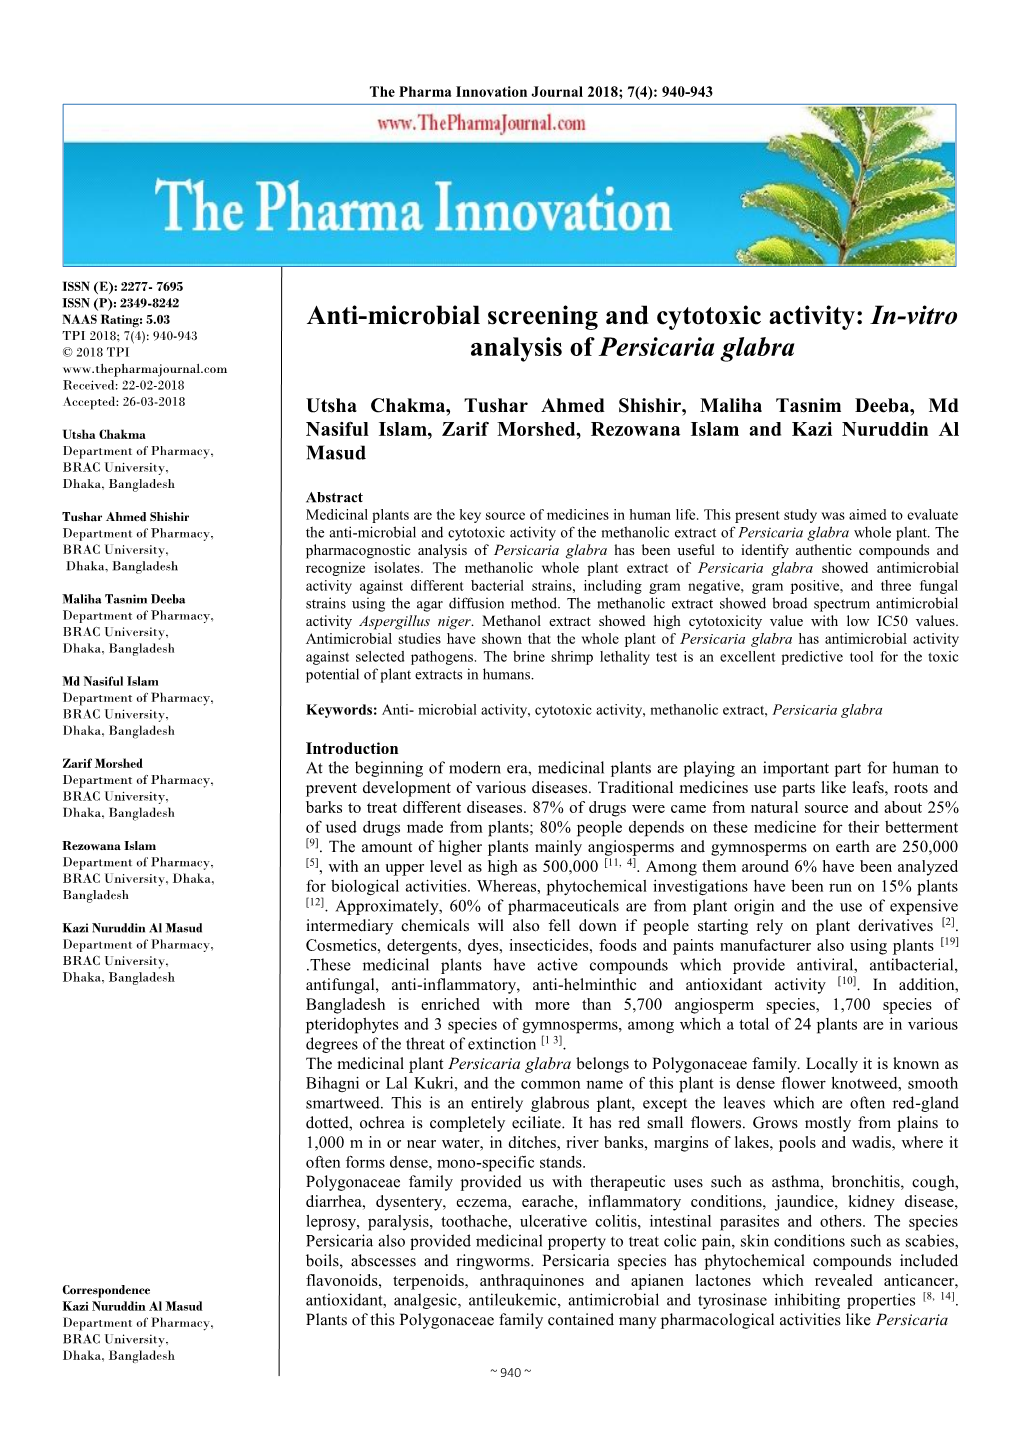 In-Vitro Analysis of Persicaria Glabra